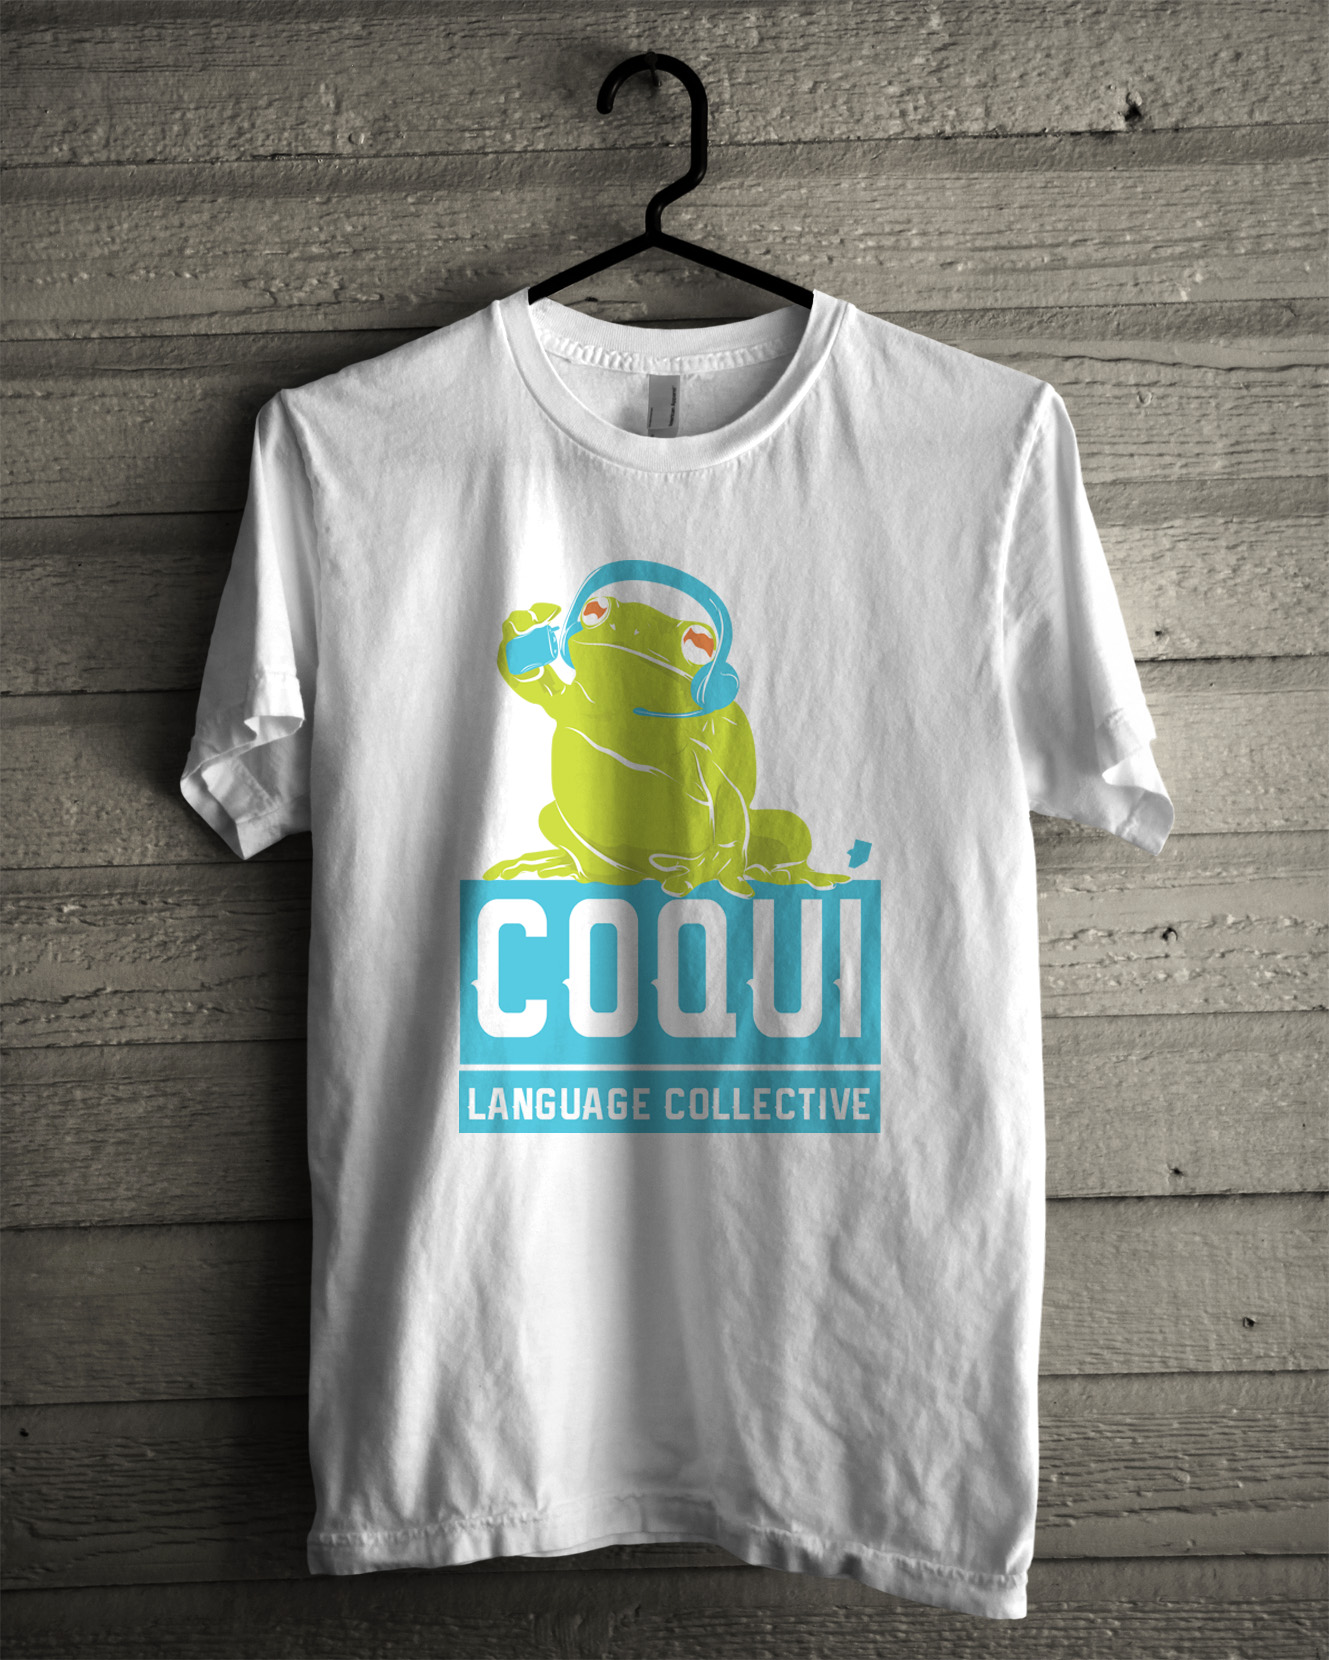 coqui_color frog_white shirt.jpg